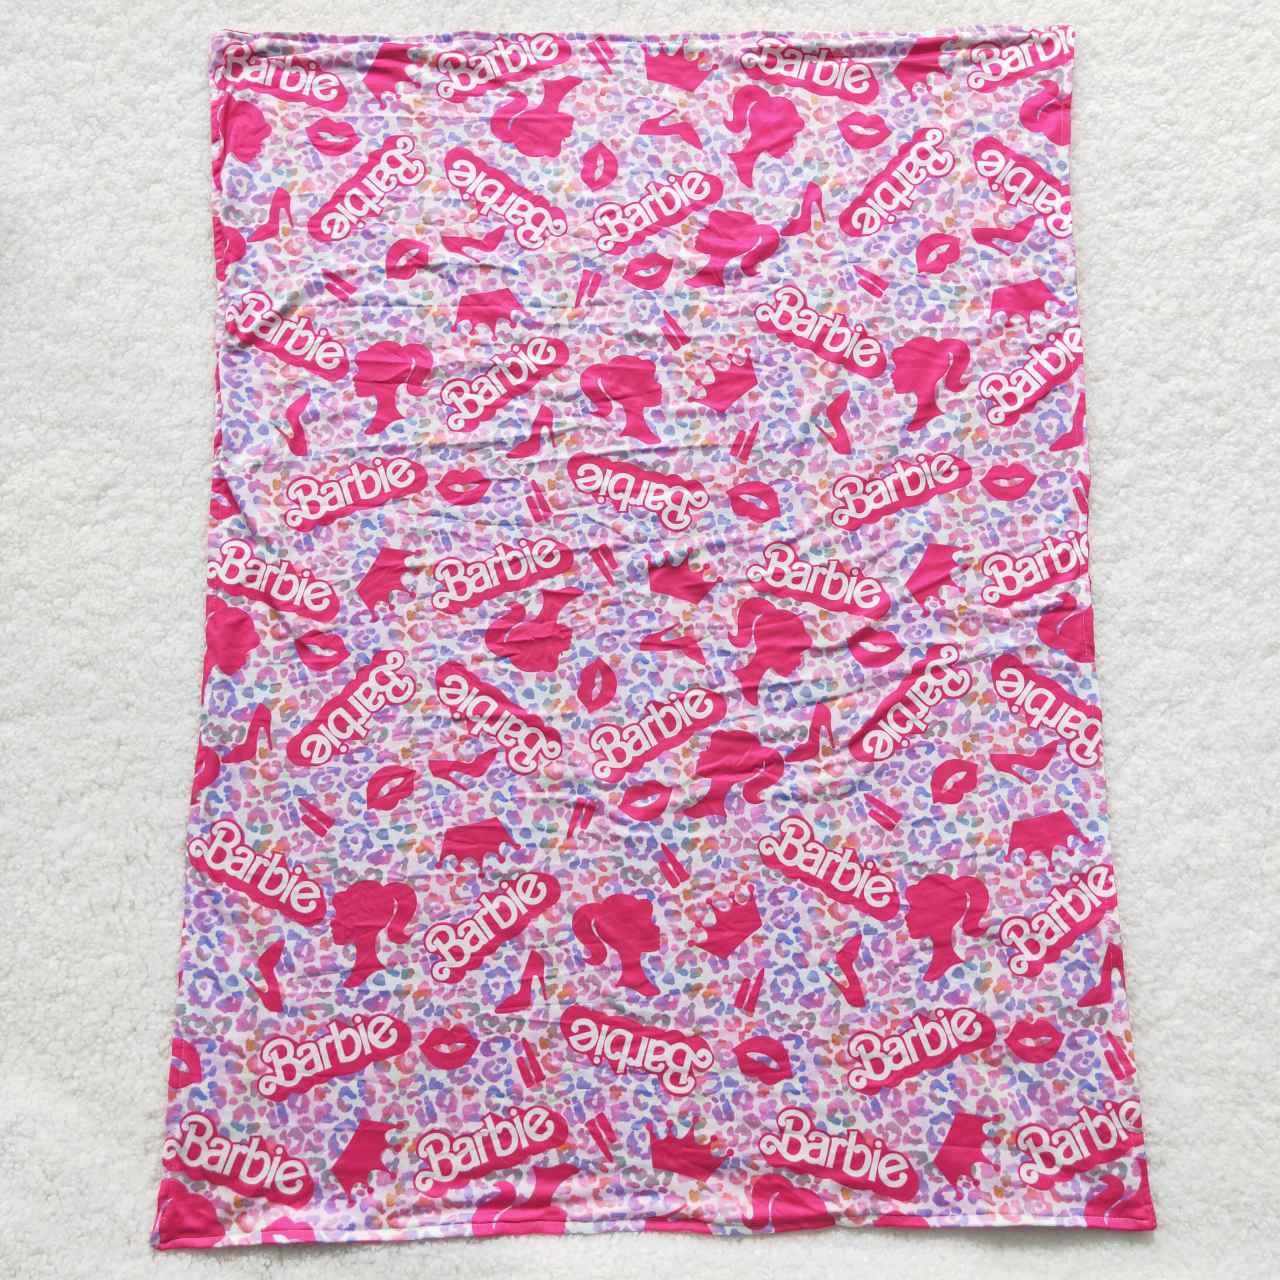 Hot pink BA print blanket BL0053